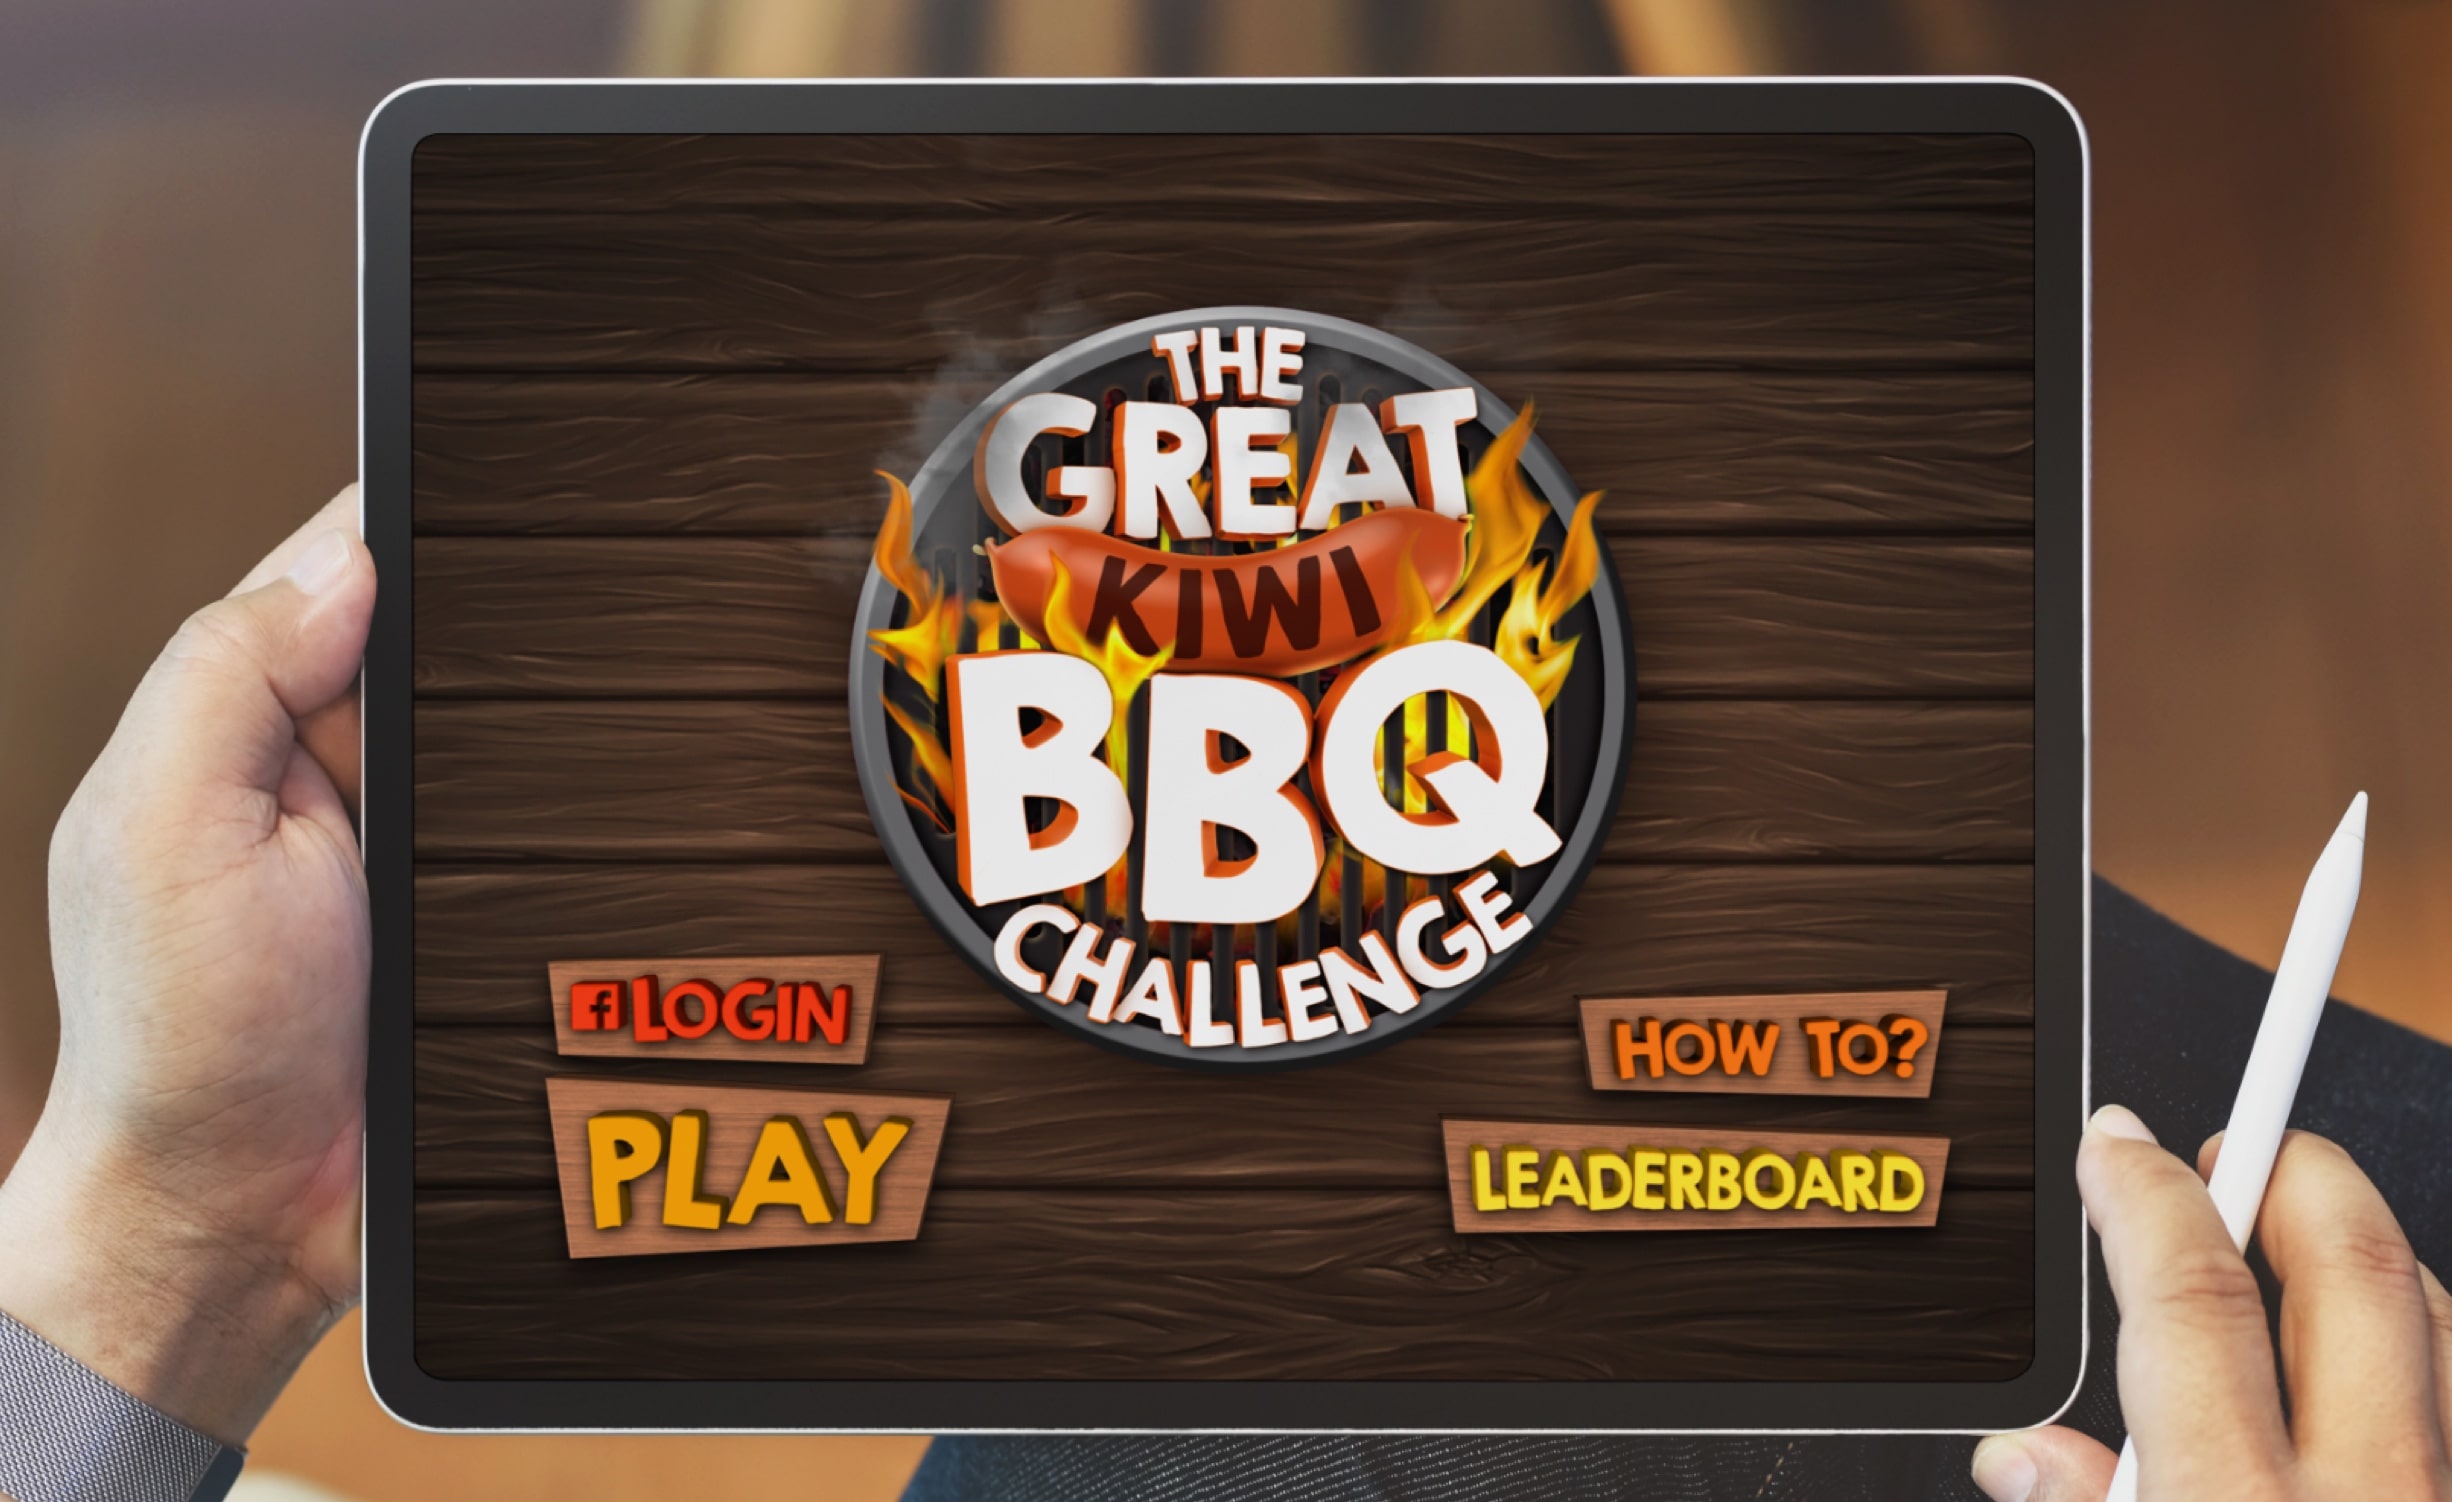 Hellers BBQ game challenge